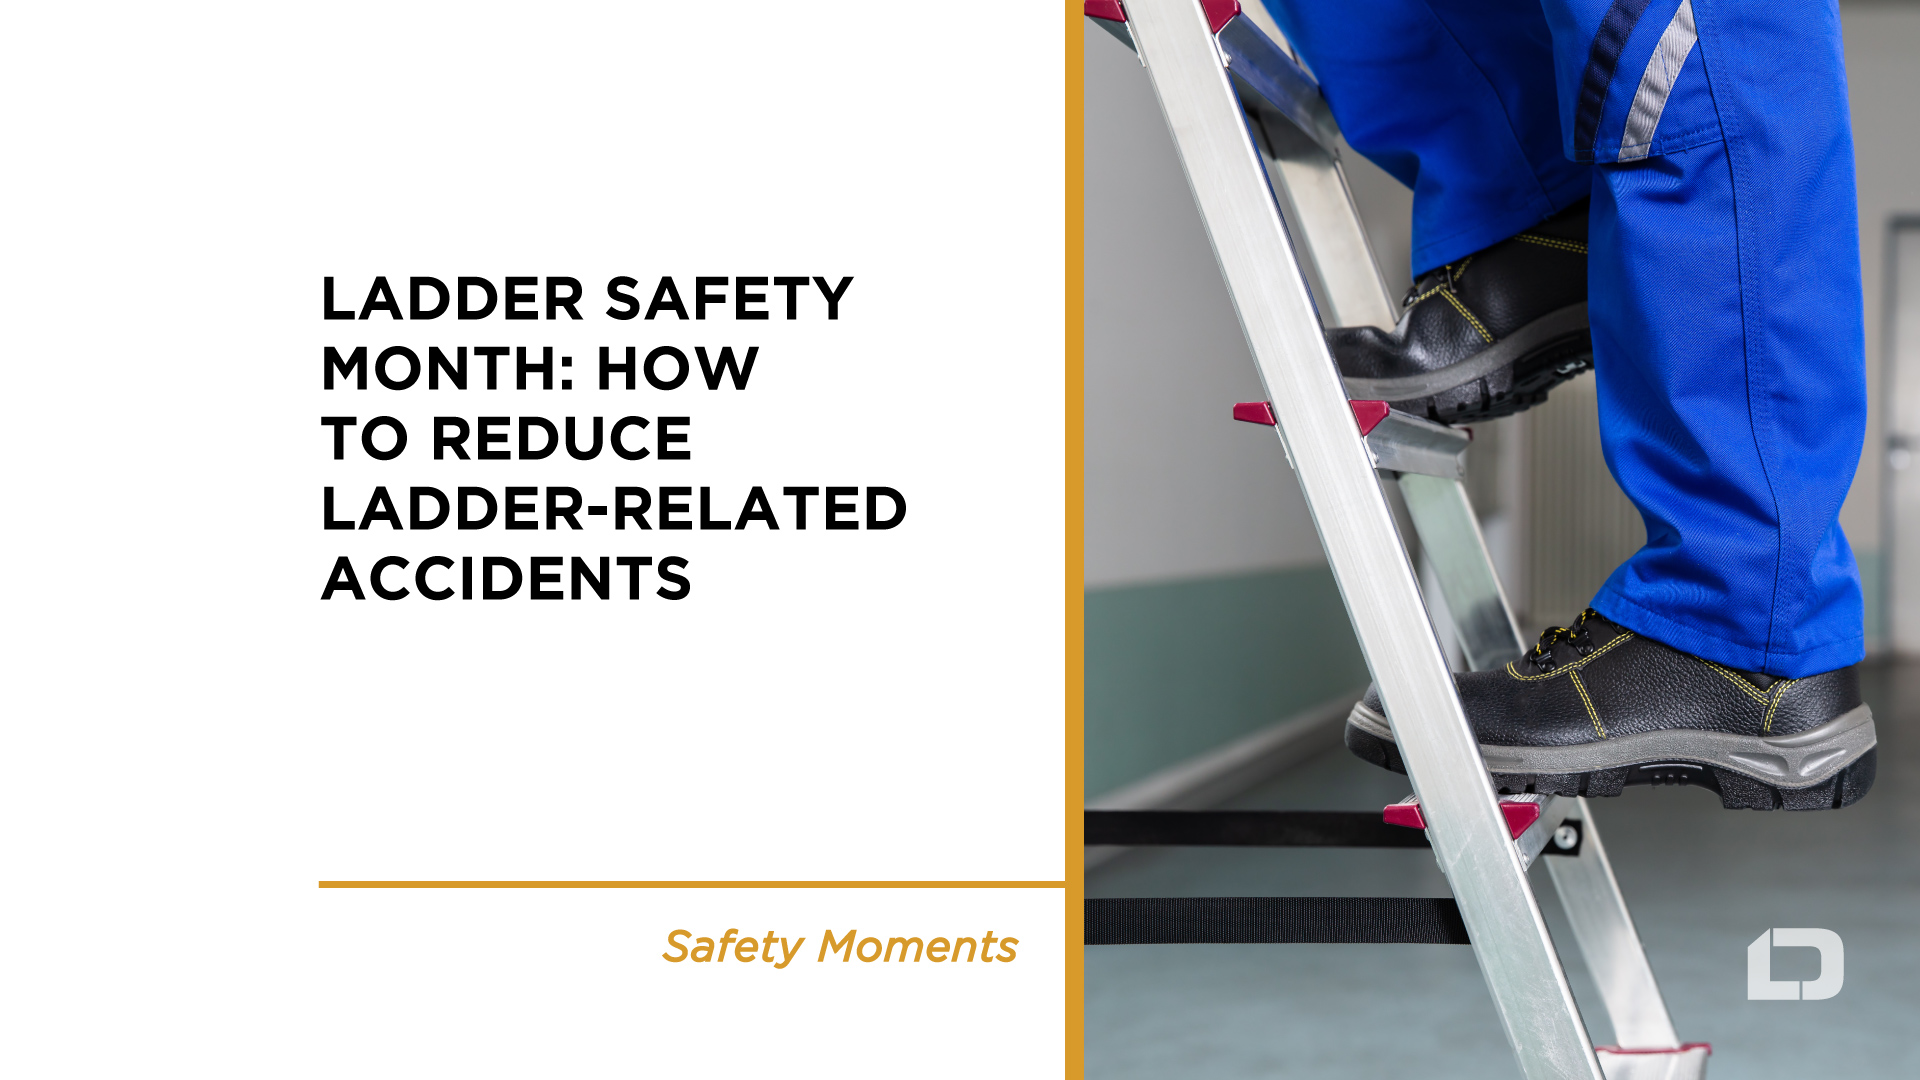 National Ladder Safety Month